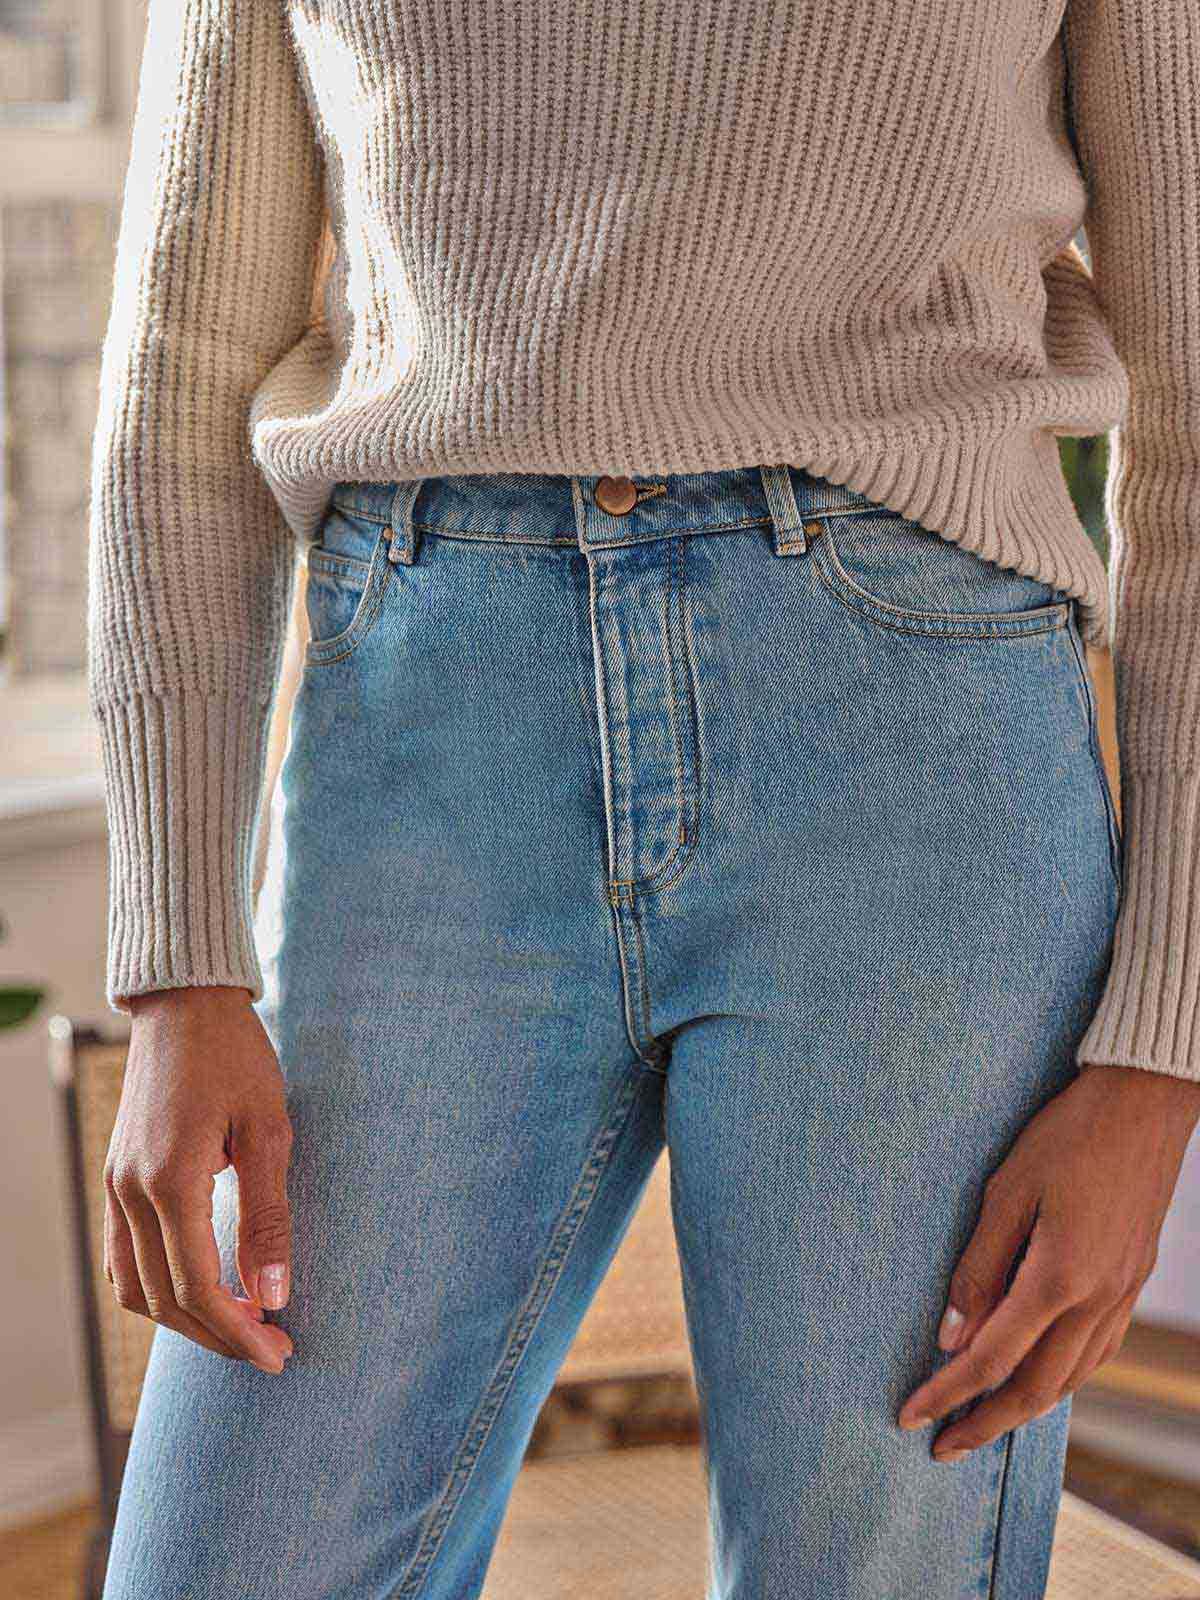 Essential Organic Cotton Boyfriend Jeans - Vintage Blue